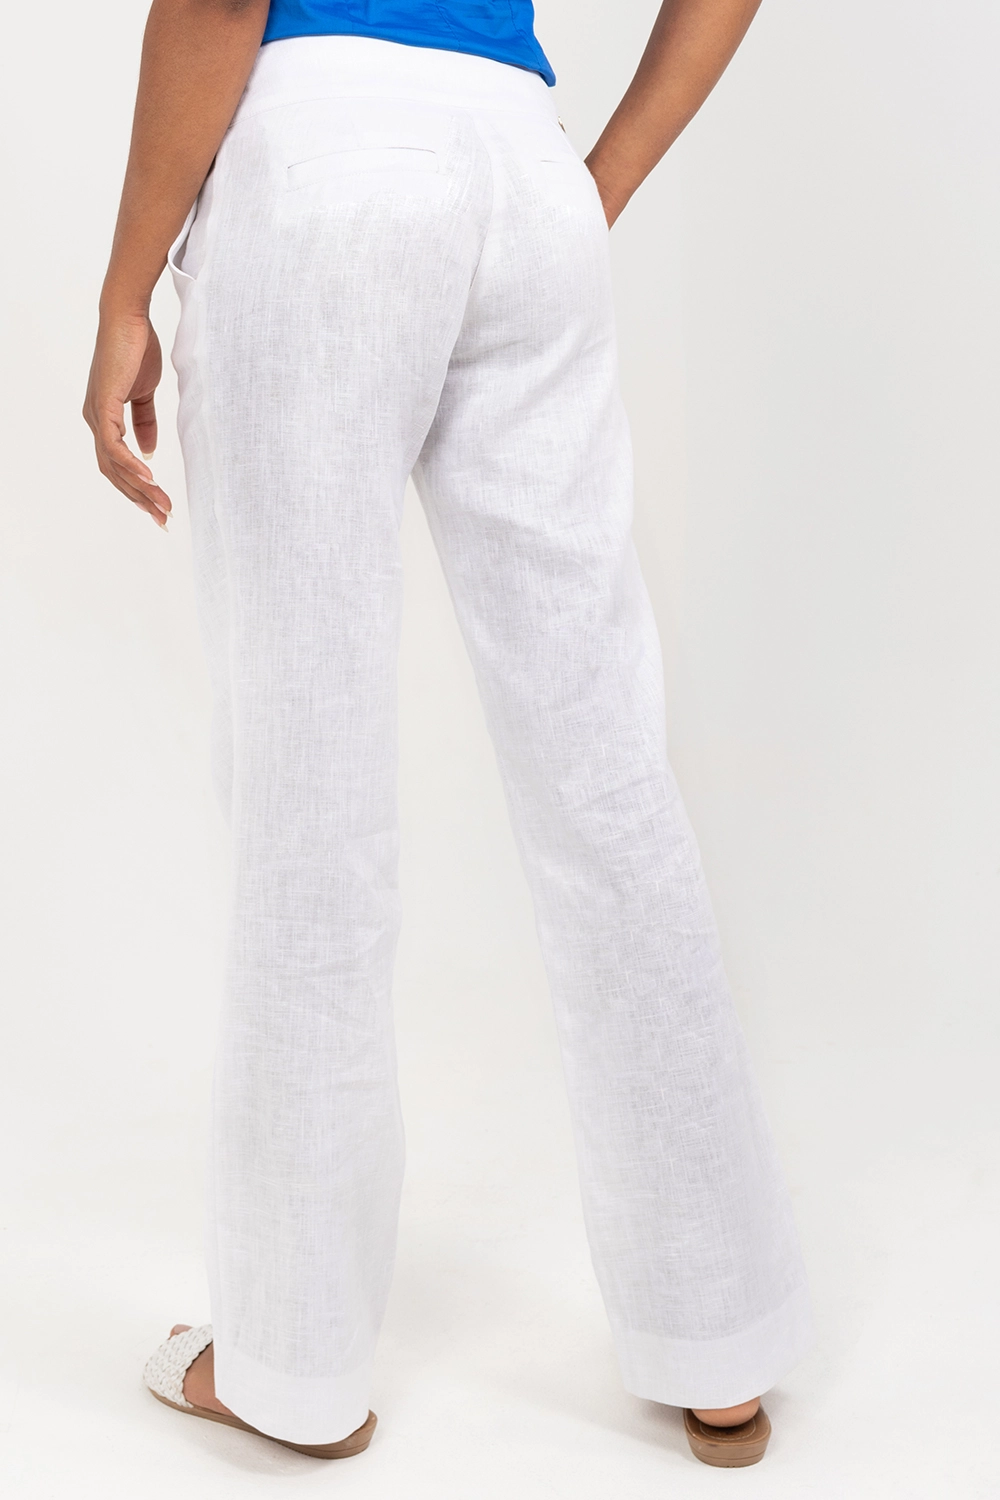 Pantalón básico slim en lino tiro medio. Blanco talla 12